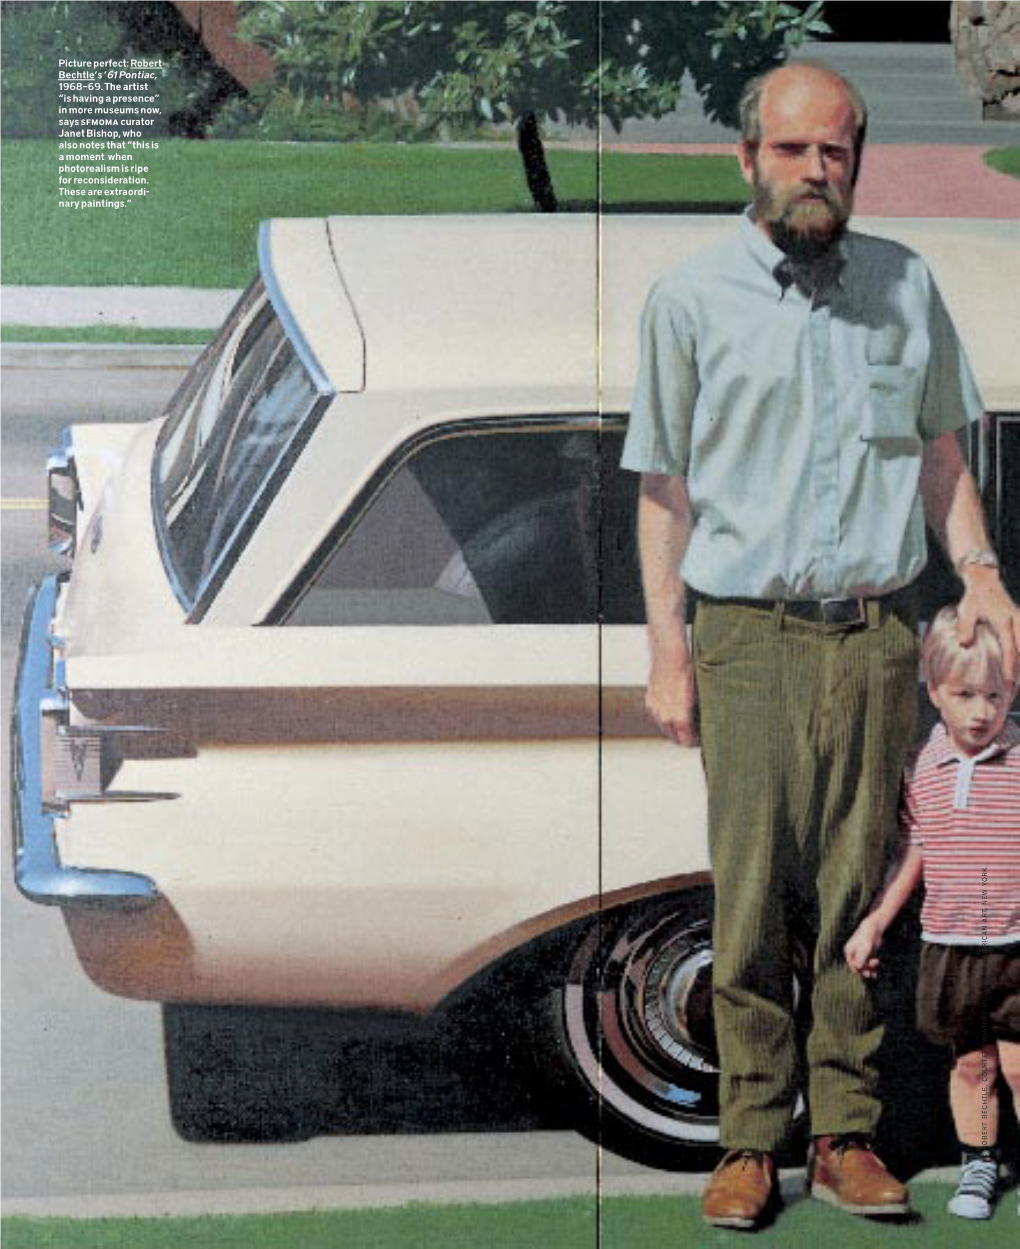 Picture Perfect: Robert Bechtle's '61 Pontiac, 1968–69